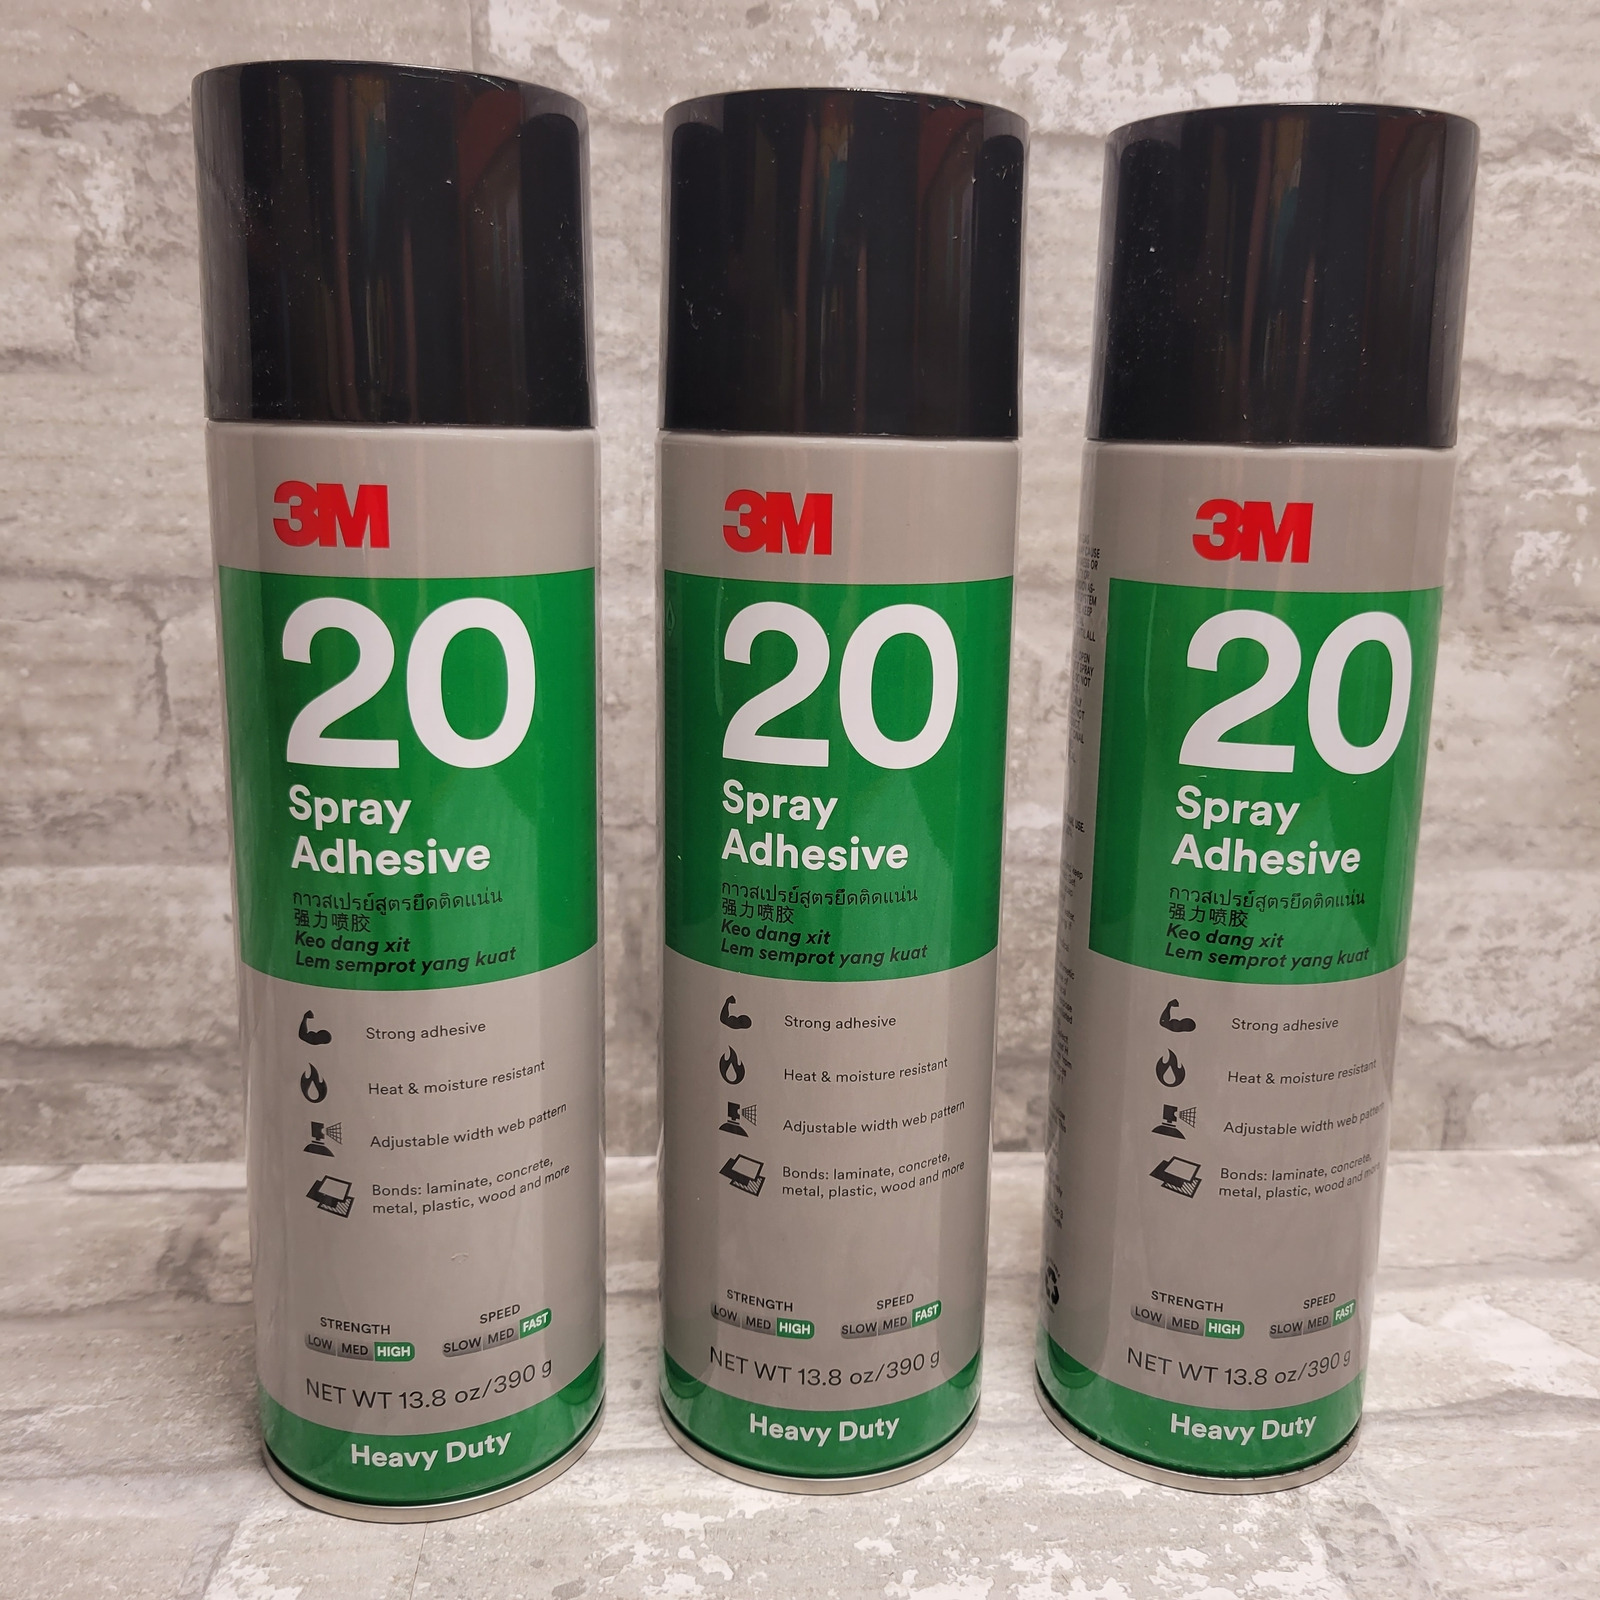 3M Heavy Duty 20 Spray Adhesive Clear, Net Weight 13.75 oz, 3 Pk